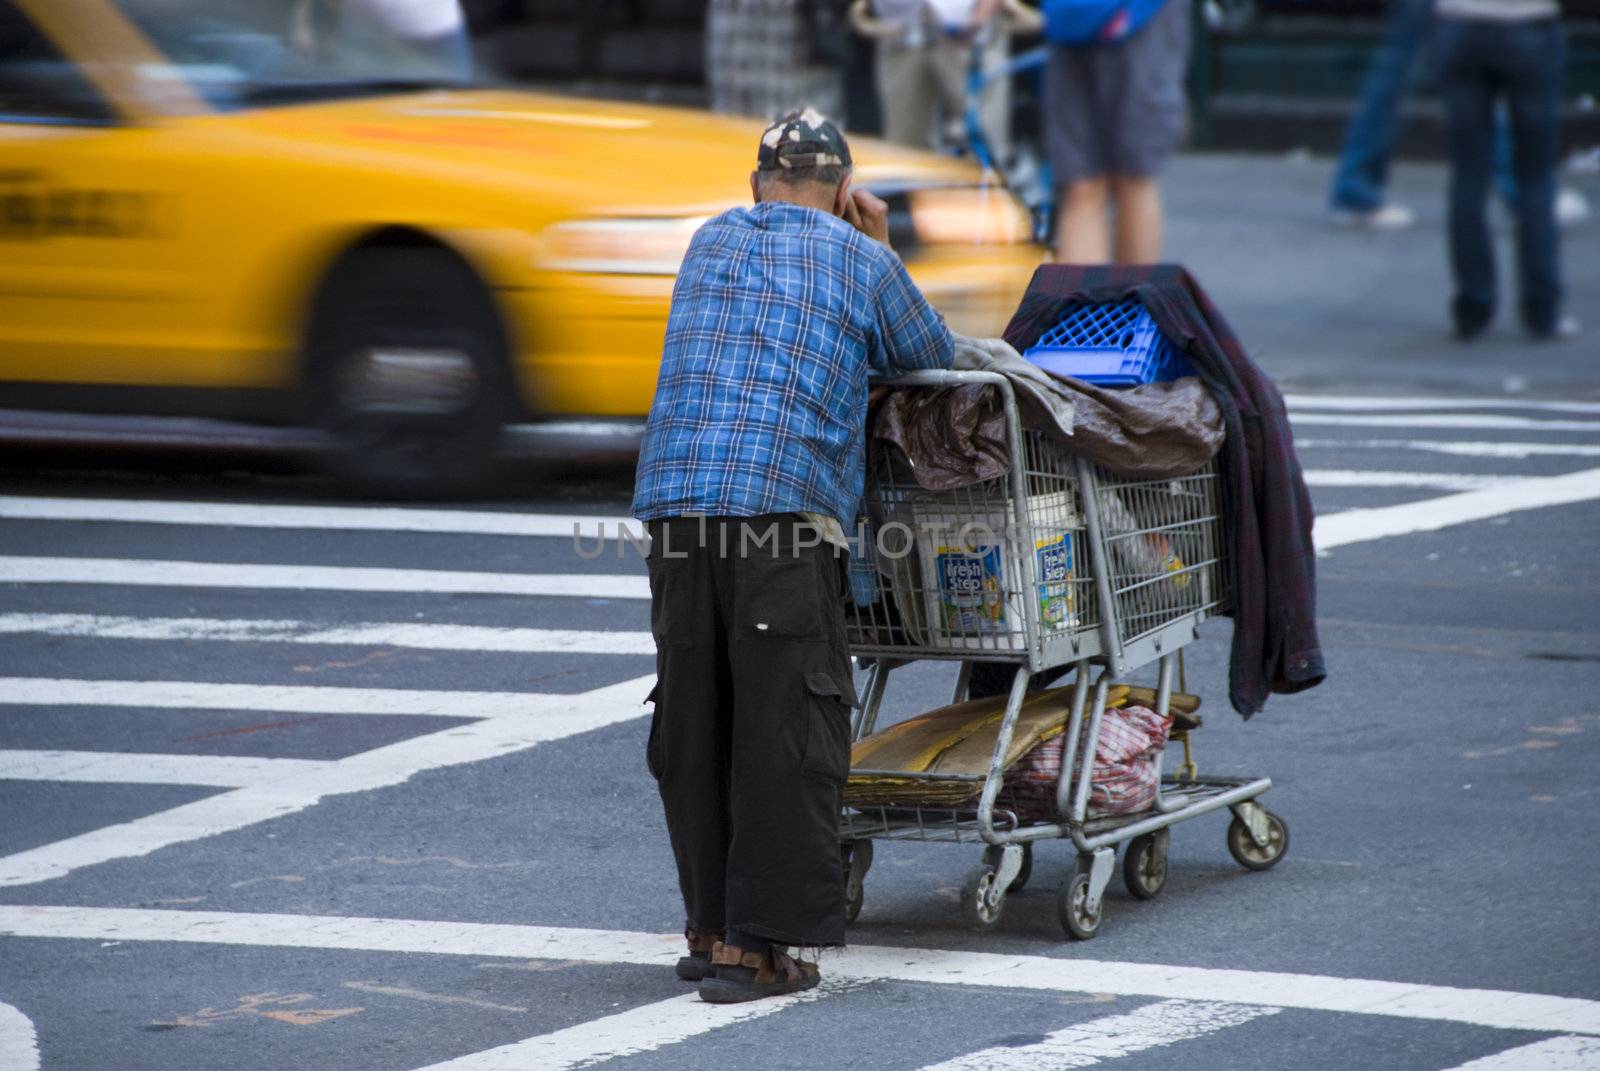 A homeless man awaiting his turn to cross the street